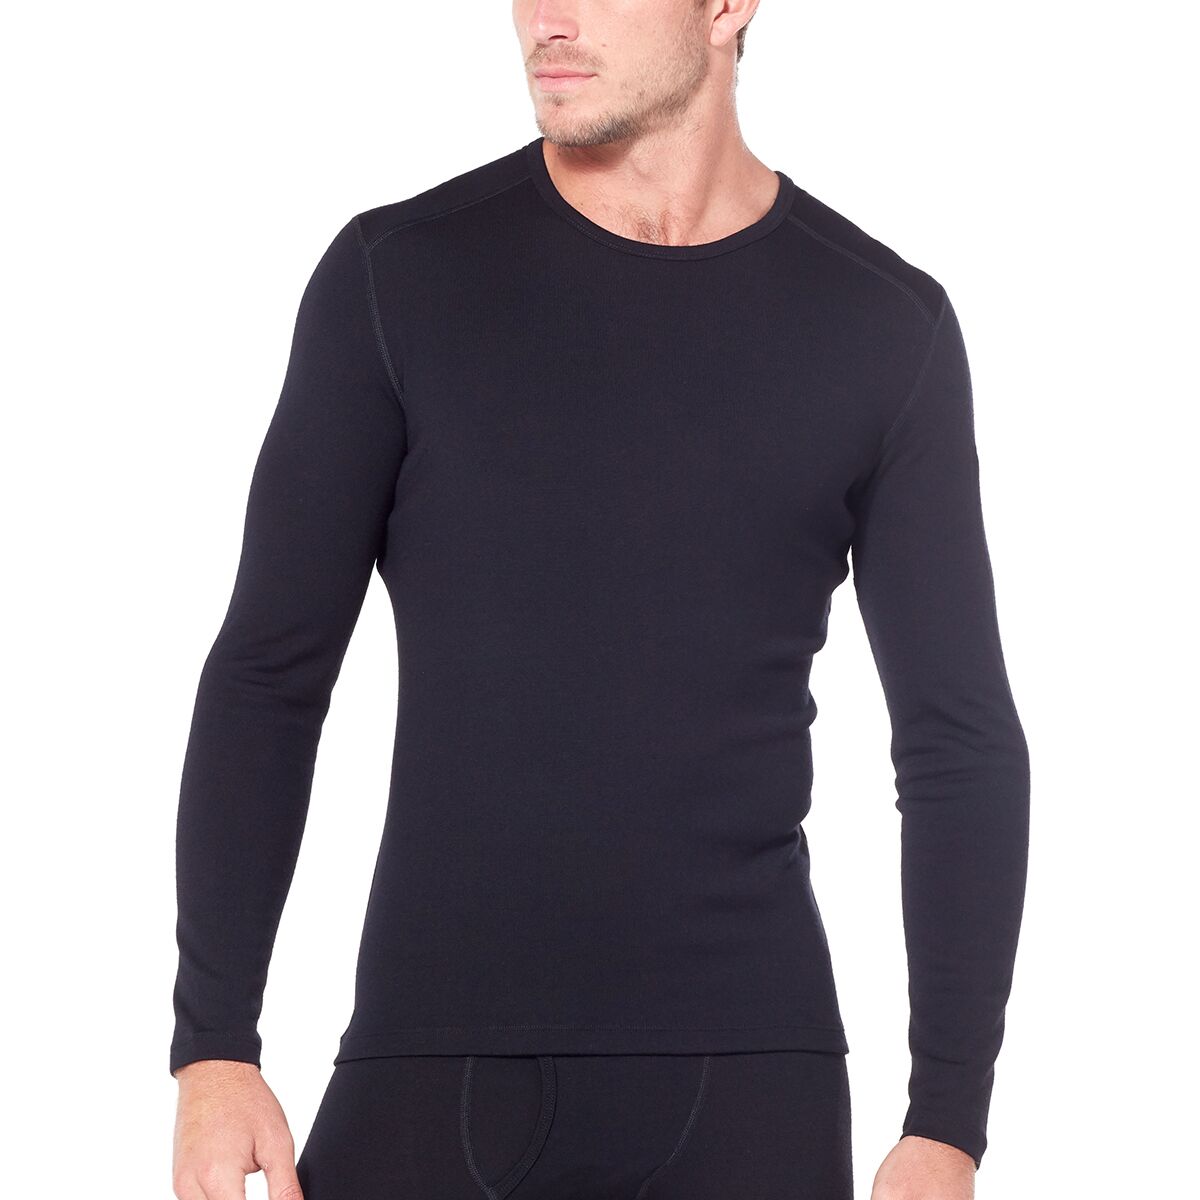 Icebreaker Merino T-Shirts for Men, Everyday 175, Crewneck, Merino Wool  Base Layer - Soft, Short Sleeved Thermal Shirts for Men with Stretchy, Slim  Fit - Men's Undershirts, Black, XX-Large : Icebreaker: 